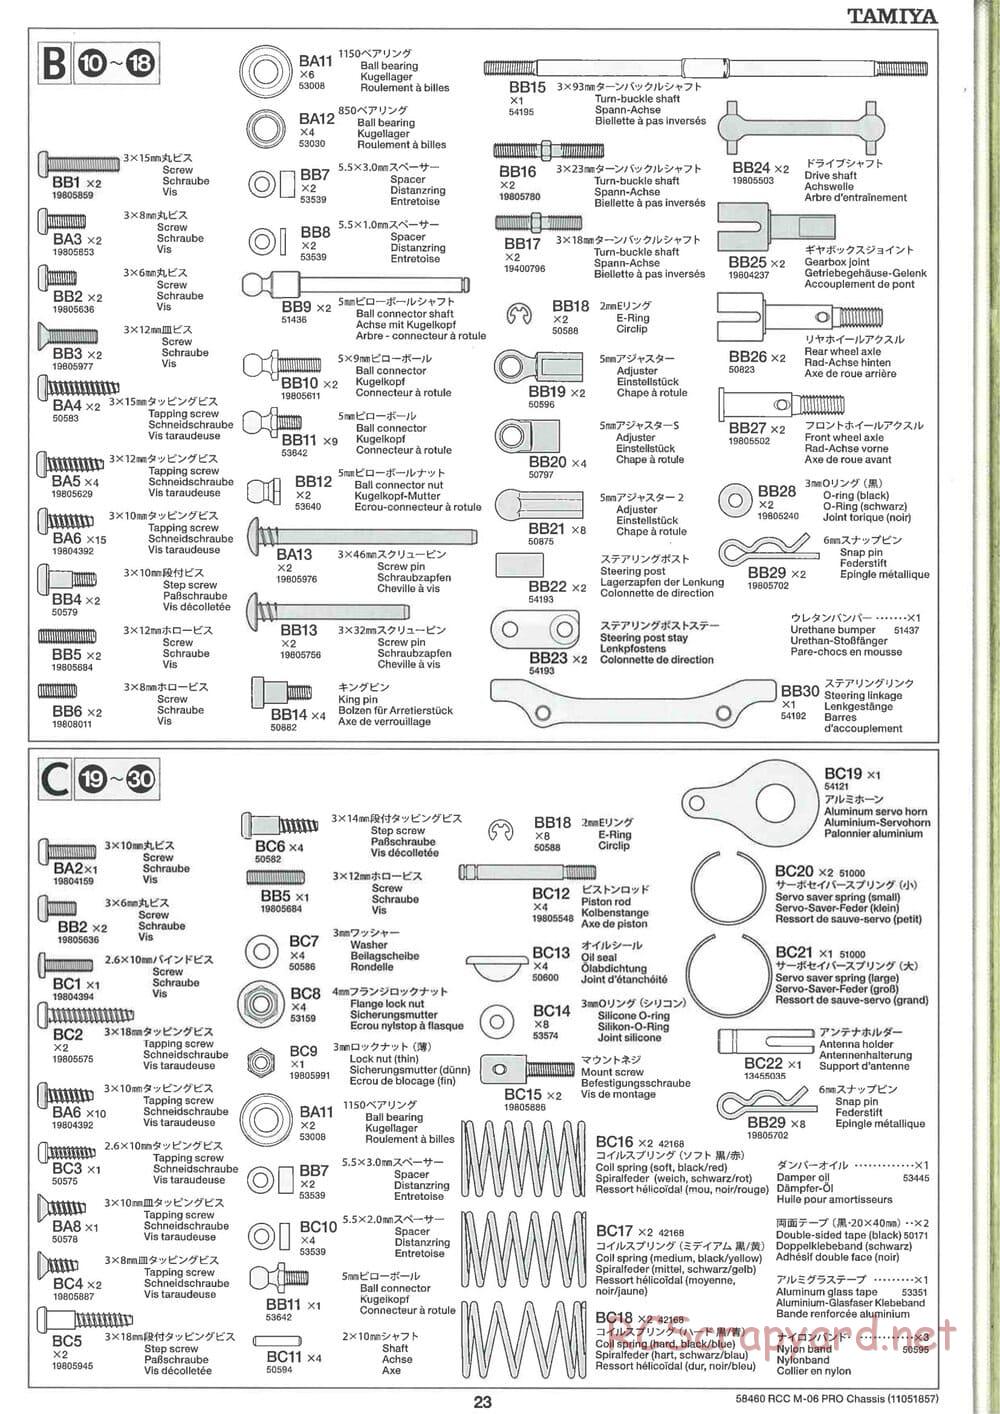 Tamiya - M-06 Pro Chassis - Manual - Page 23